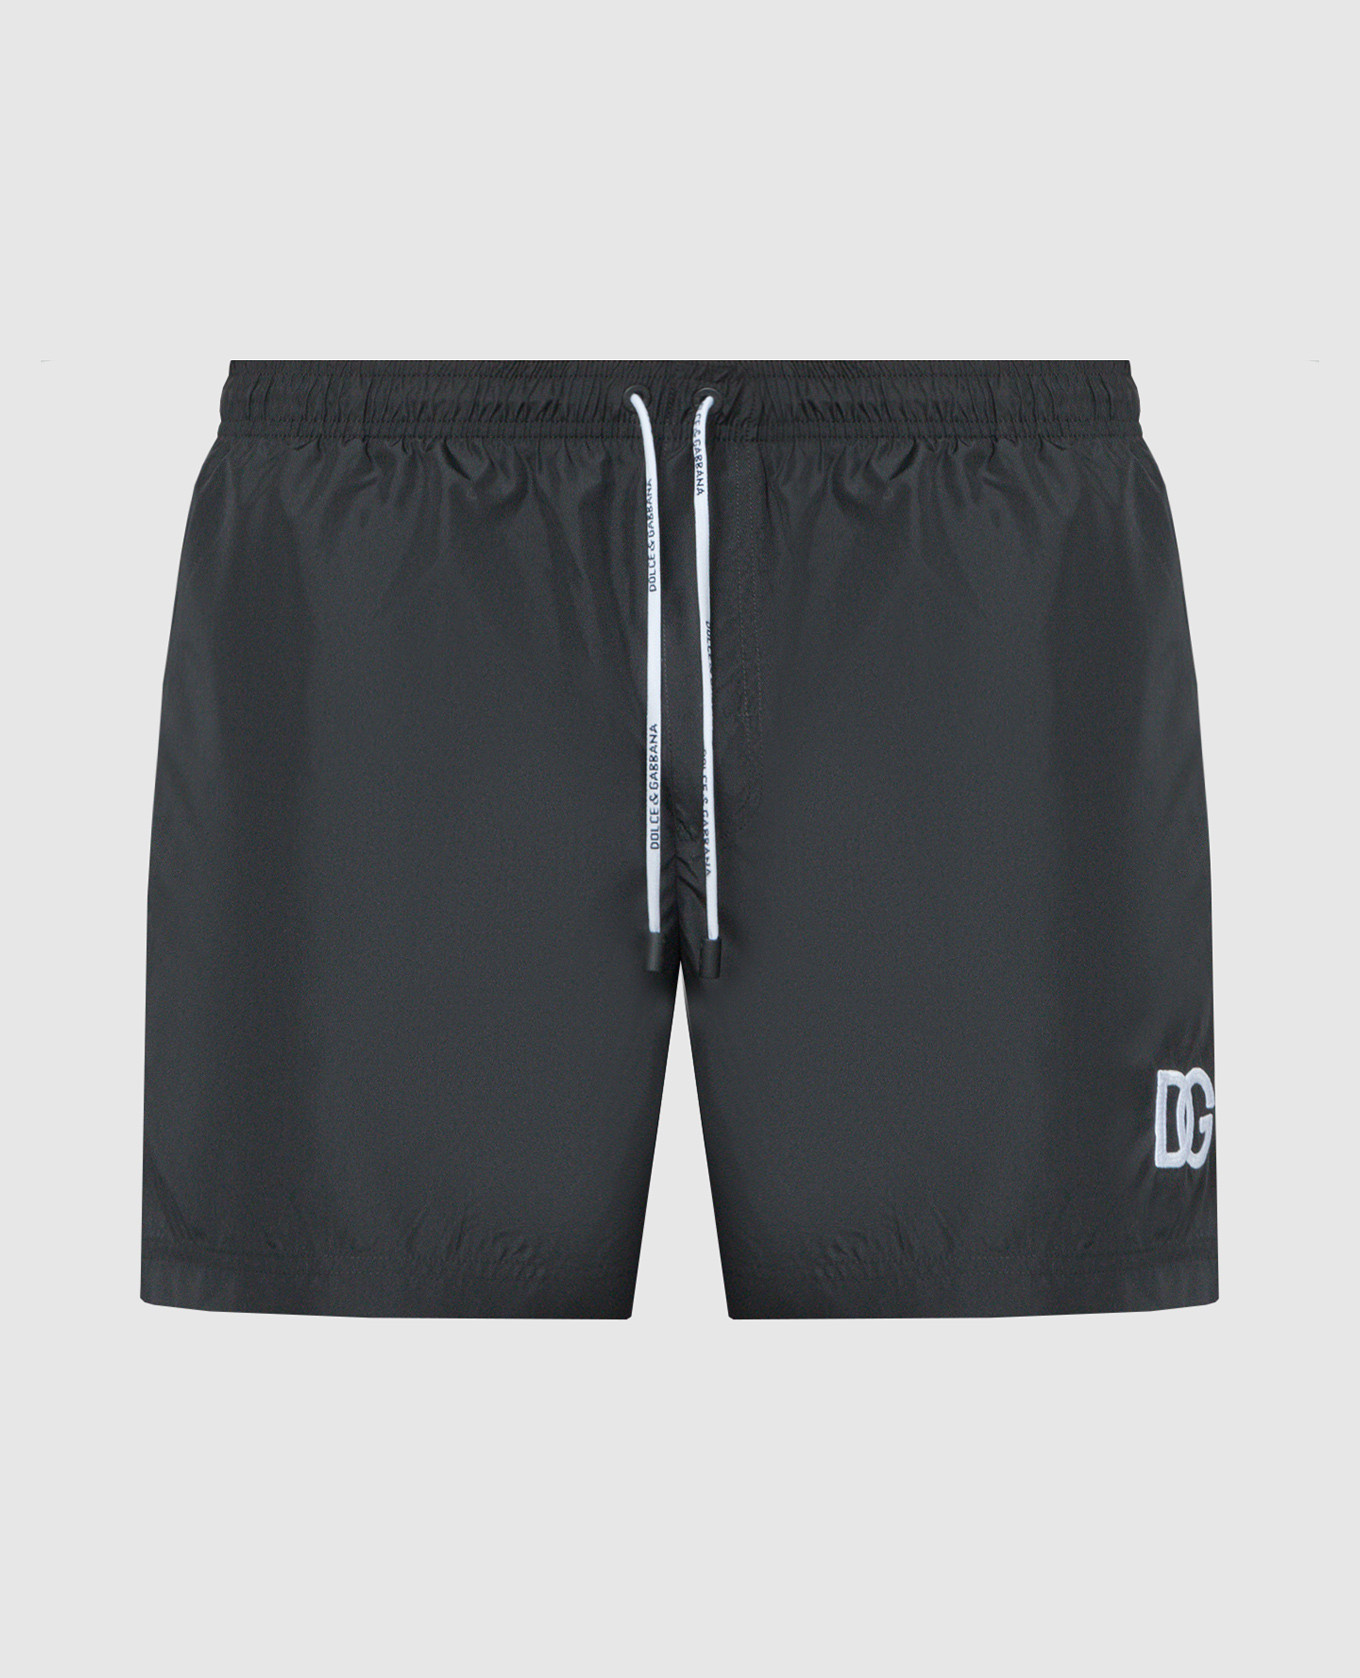 Black swim shorts with logo patch